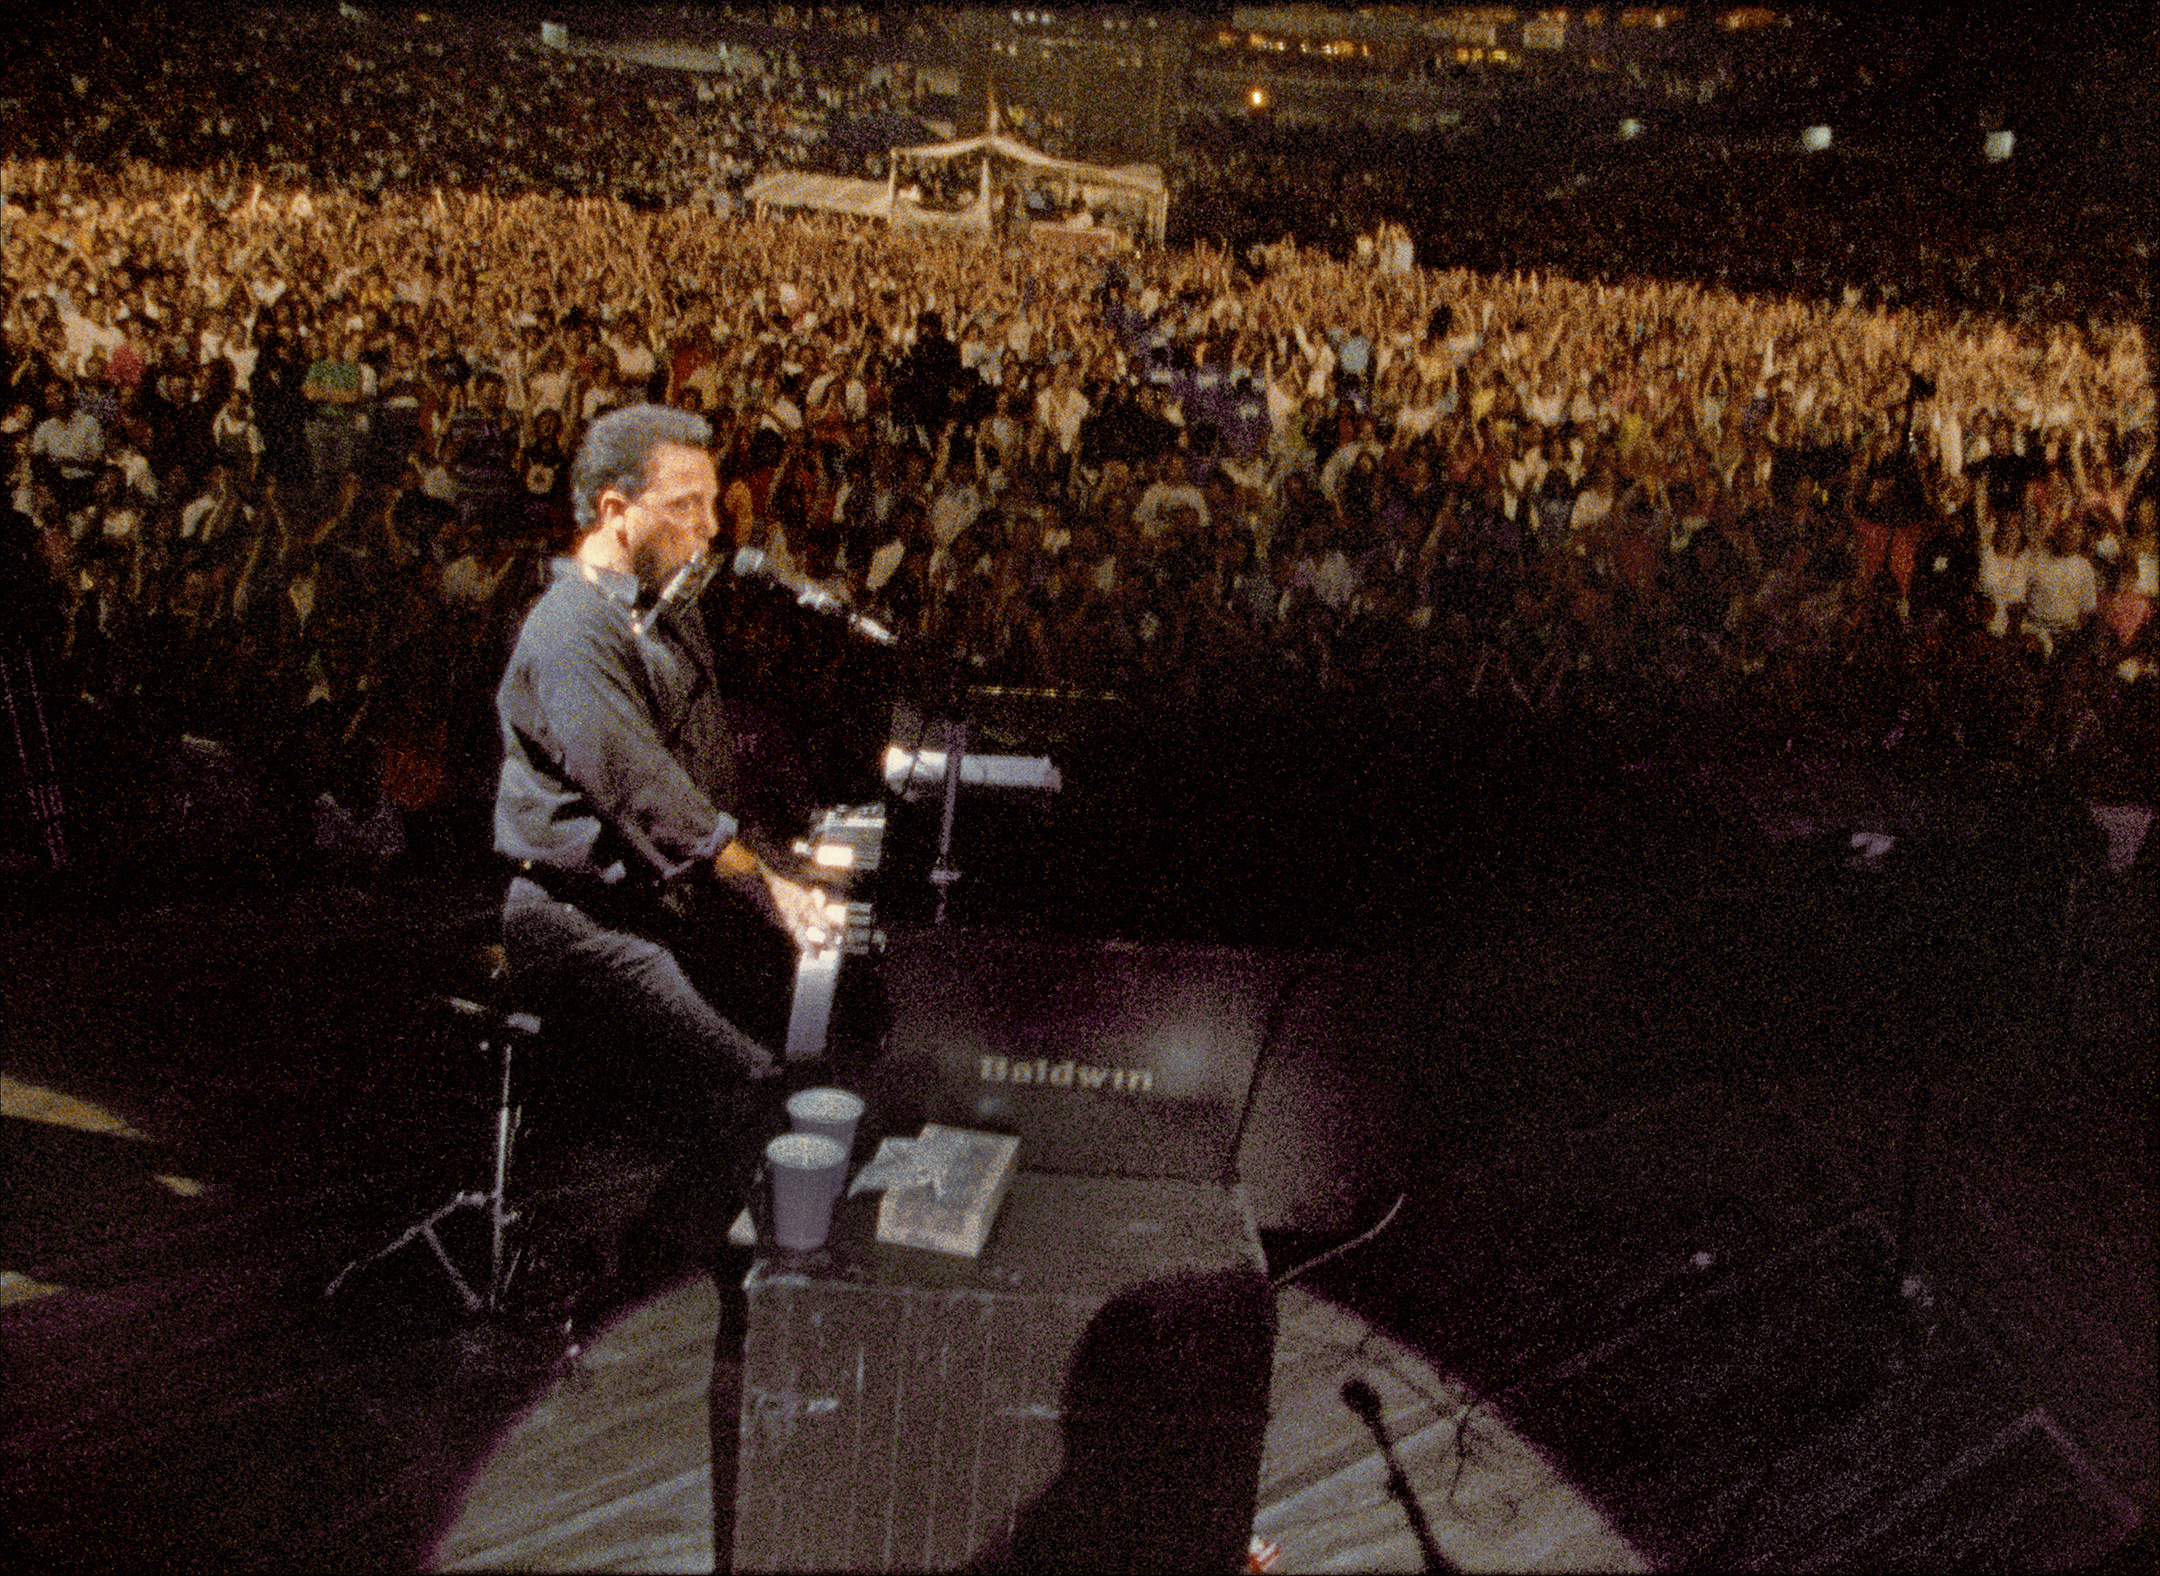 Billy Joel Live at Yankee Stadium